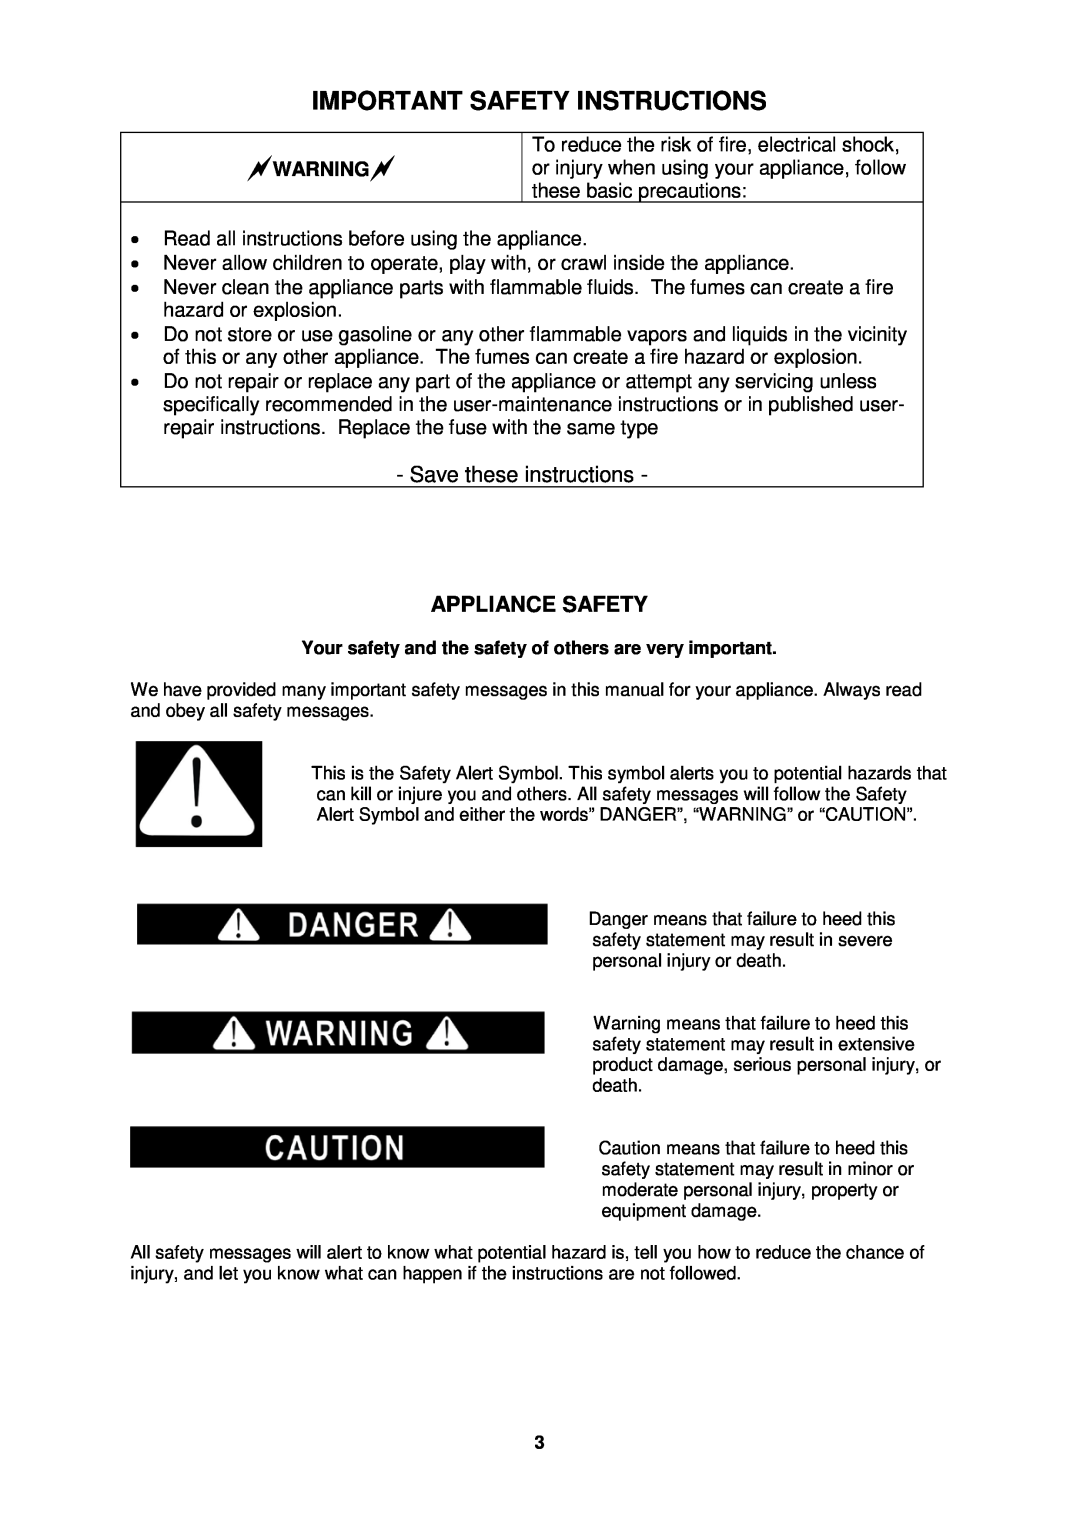 Avanti CB350S instruction manual Important Safety Instructions, Save these instructions, Appliance Safety, Warning 